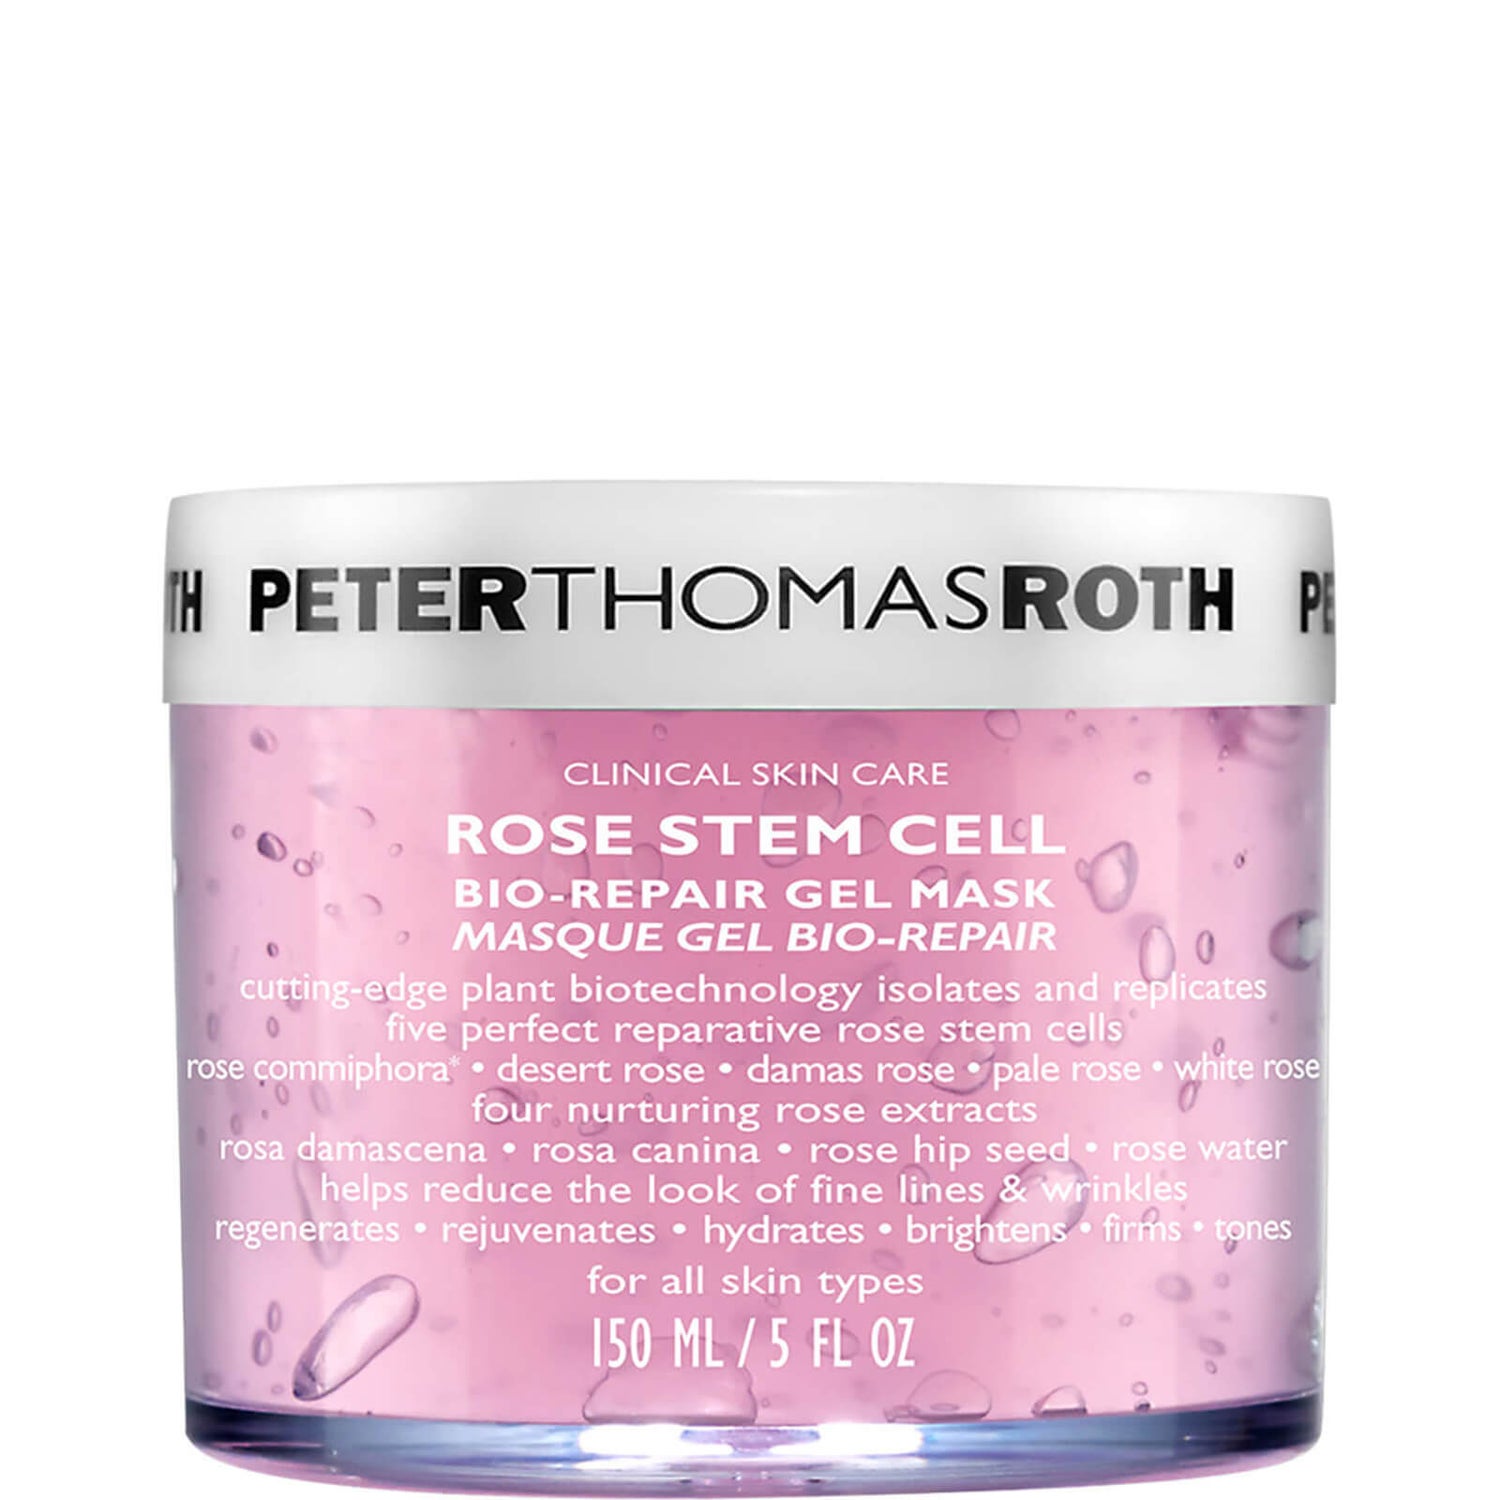 Peter Thomas Roth Rose Stem Cell: Bio-Repair Gelmaske